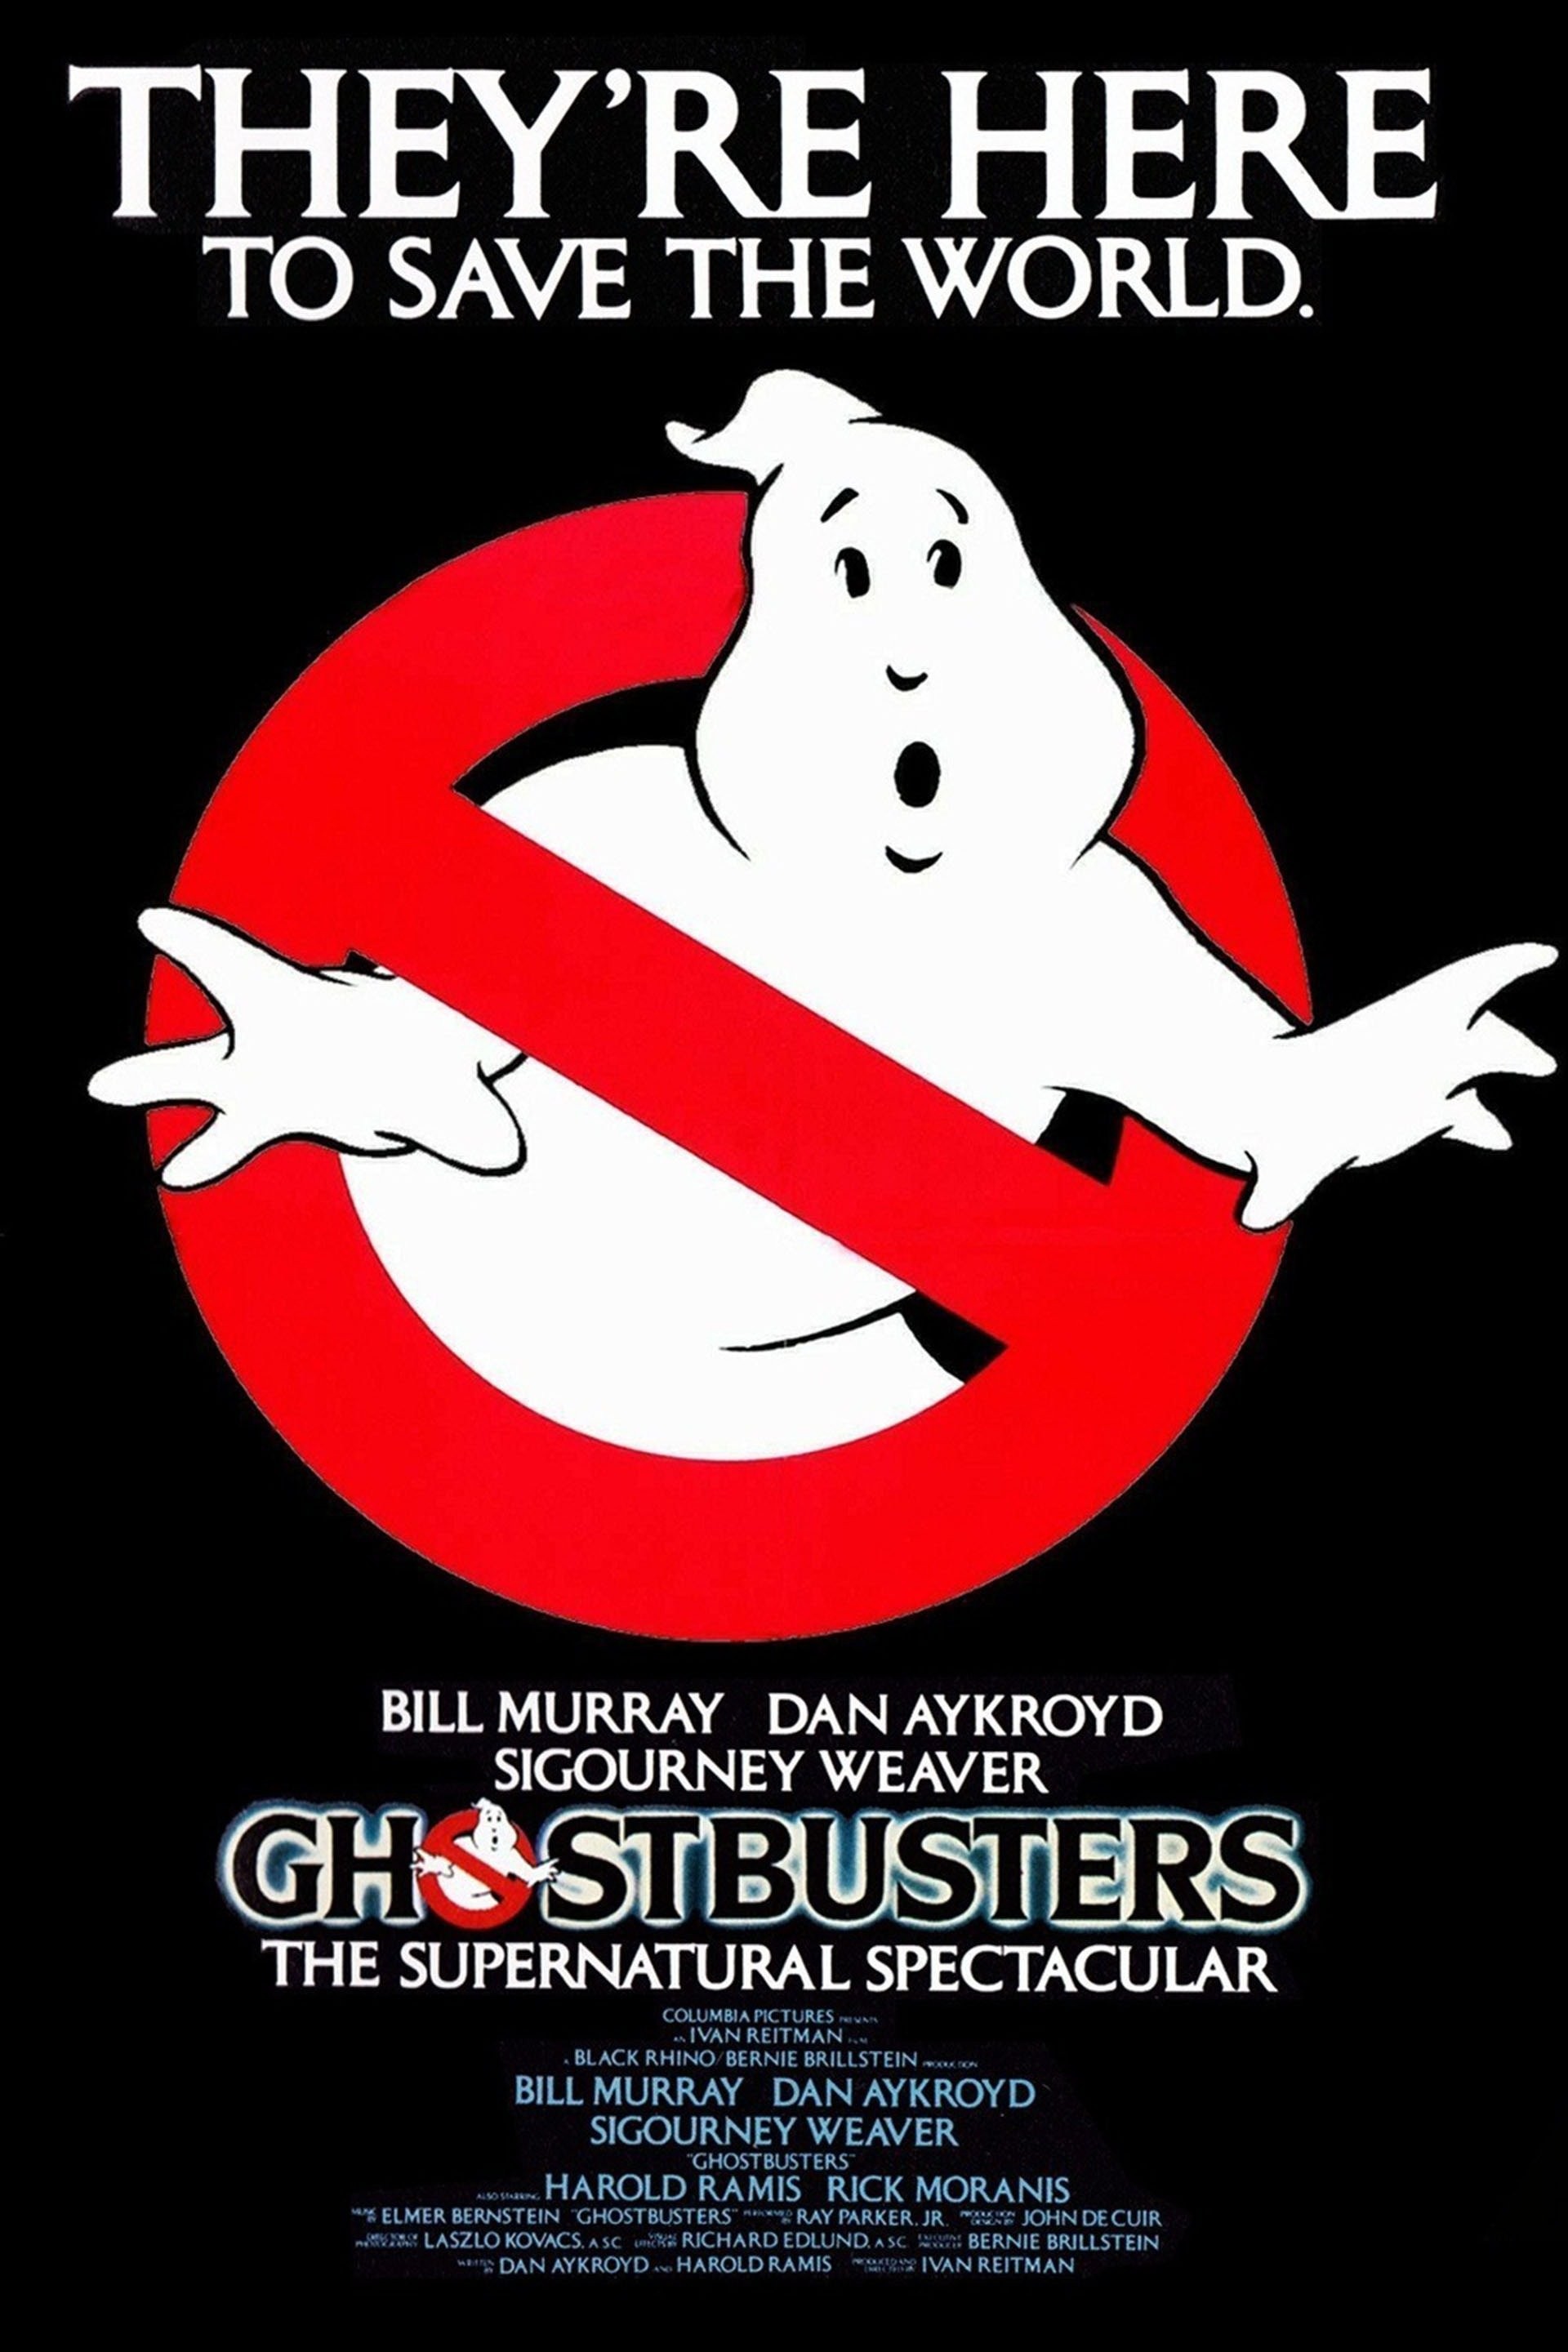 Where to Stream the Original Ghostbusters Movies